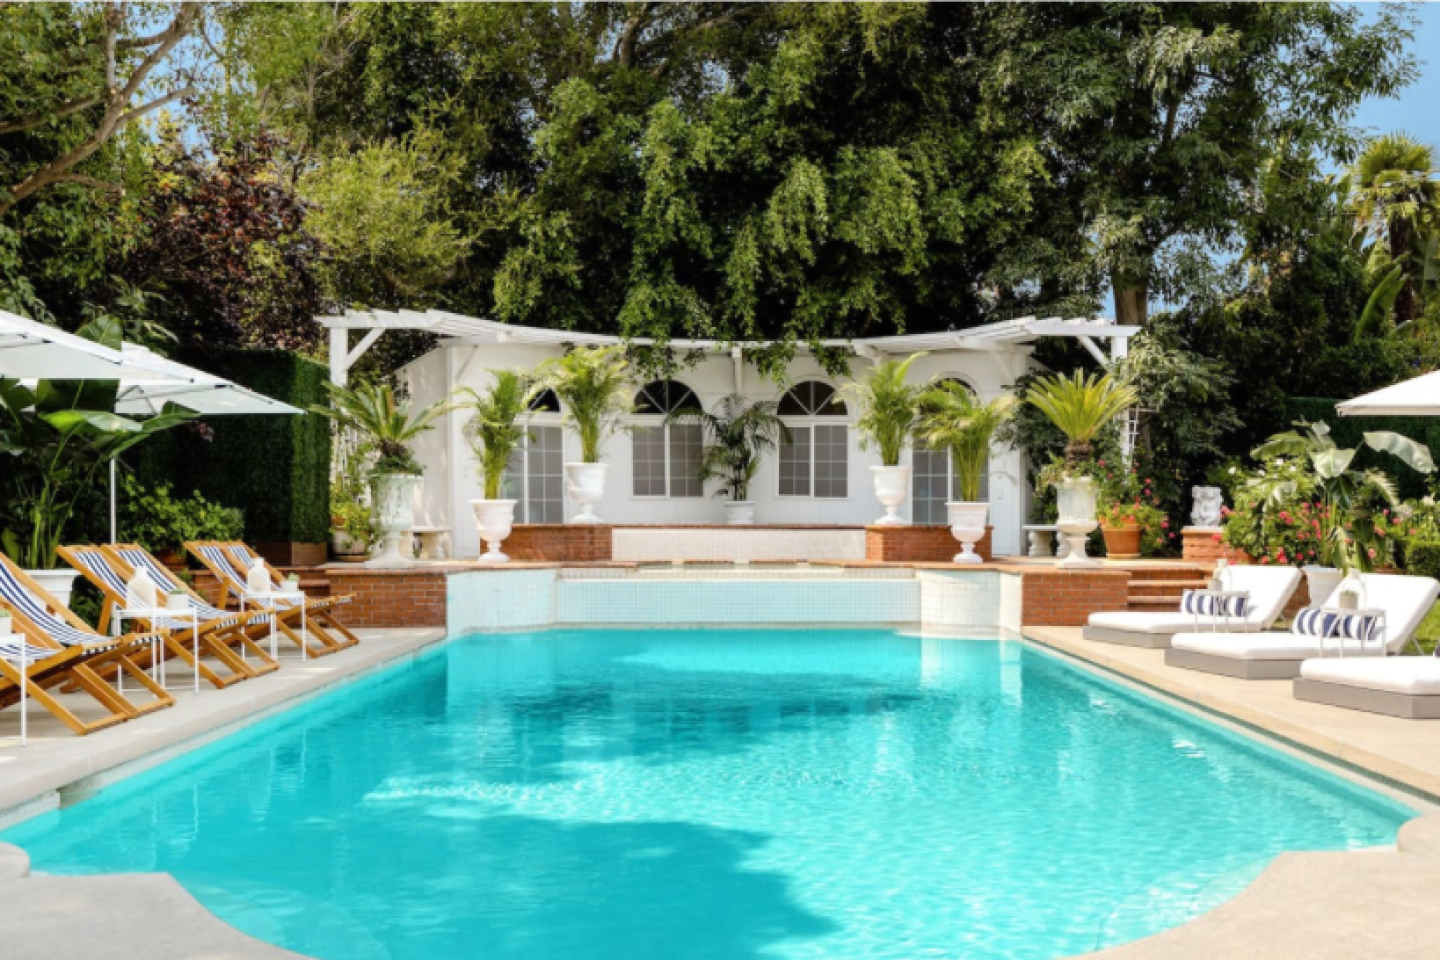 'Fresh Prince of Bel-Air' mansion: the pool